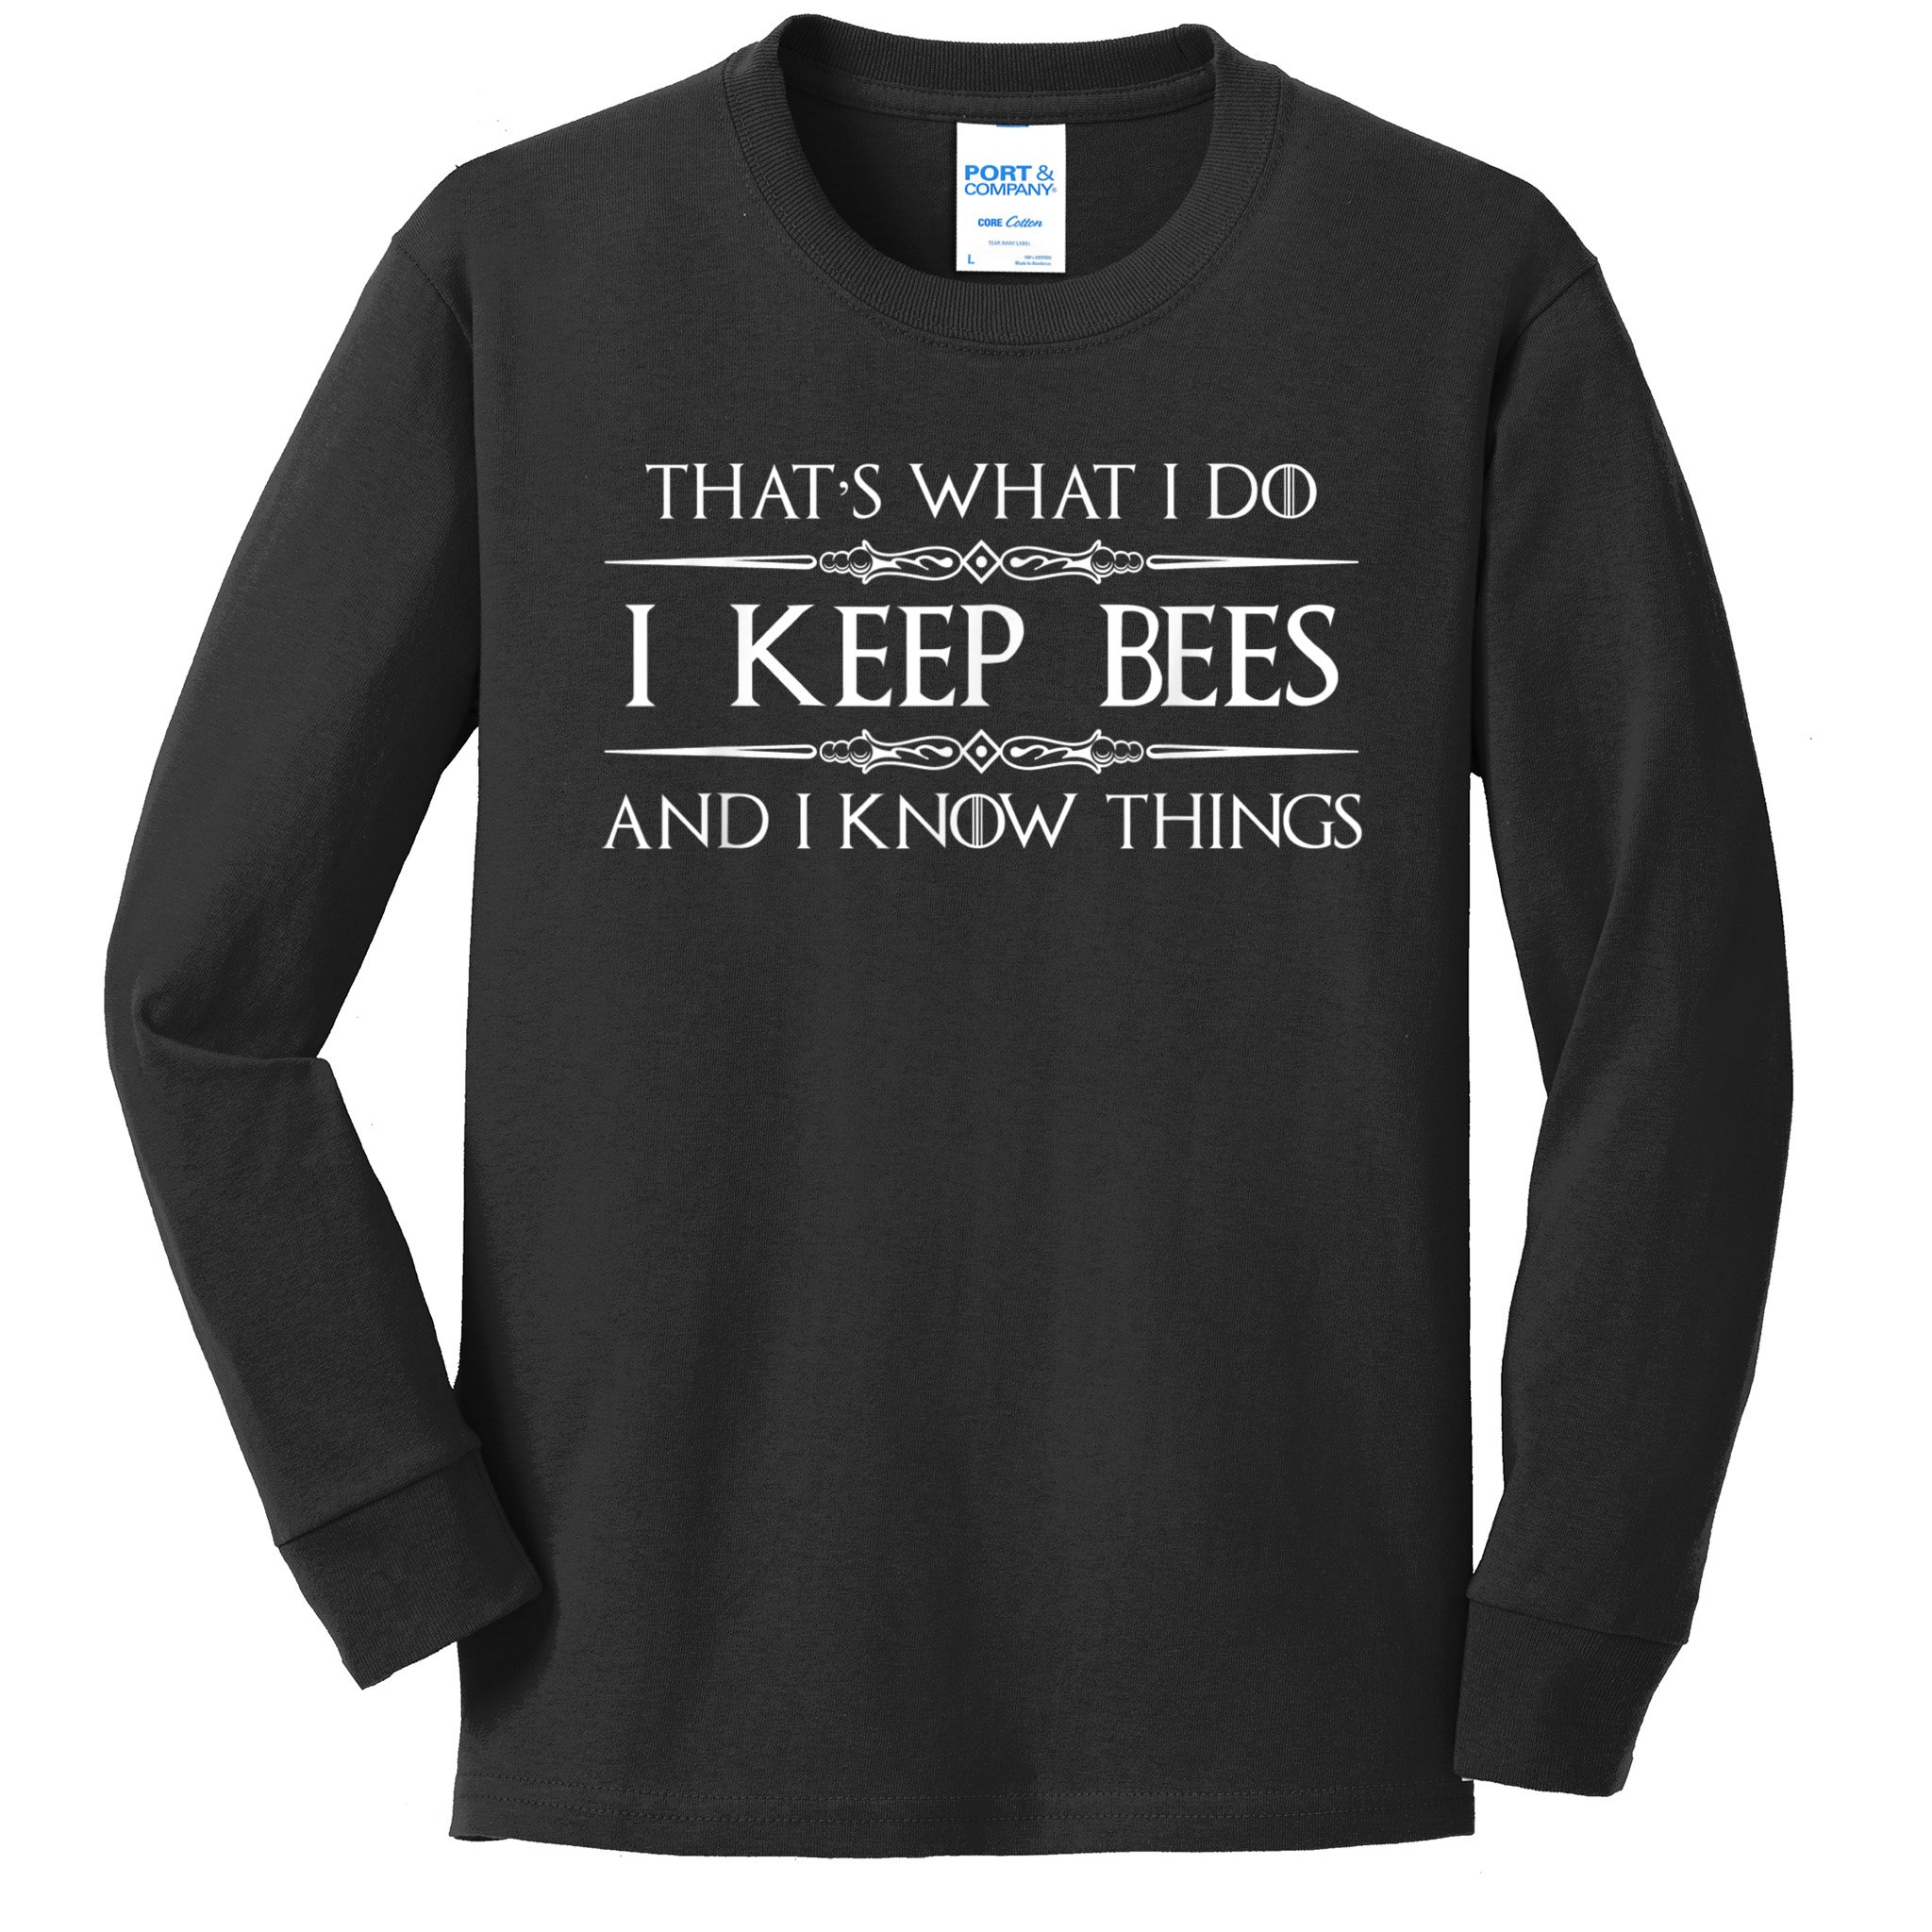 Salt Lake Bees Kids T-Shirt for Sale by eseastore